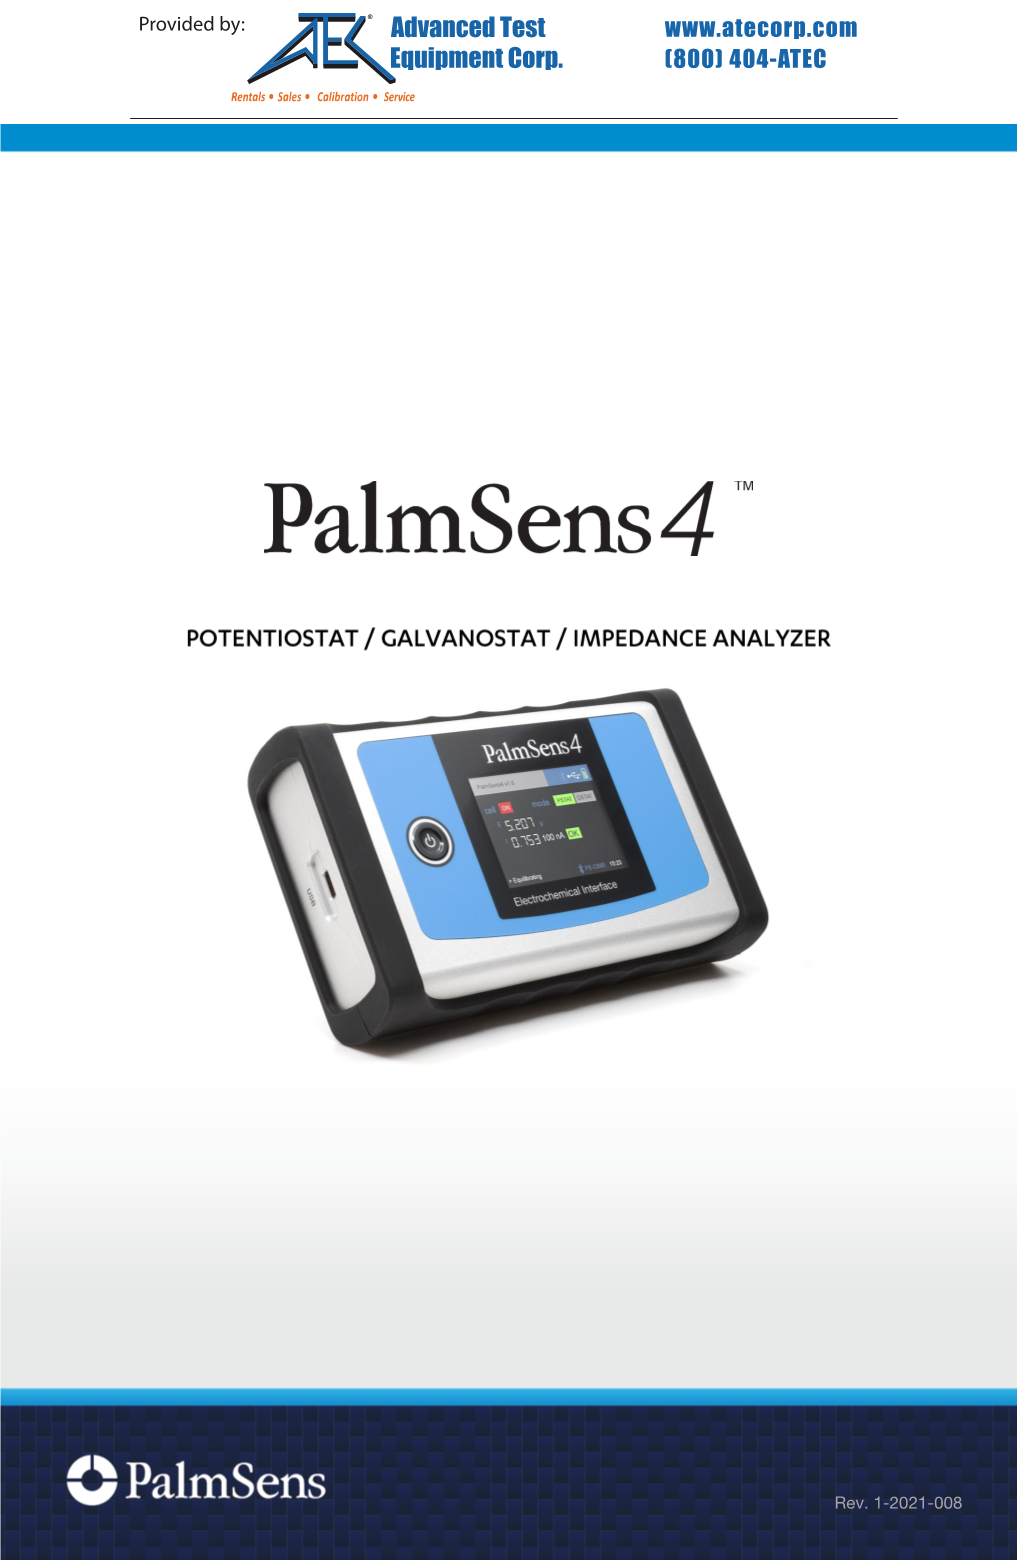 Palmsens4 Potentiostat Datasheet